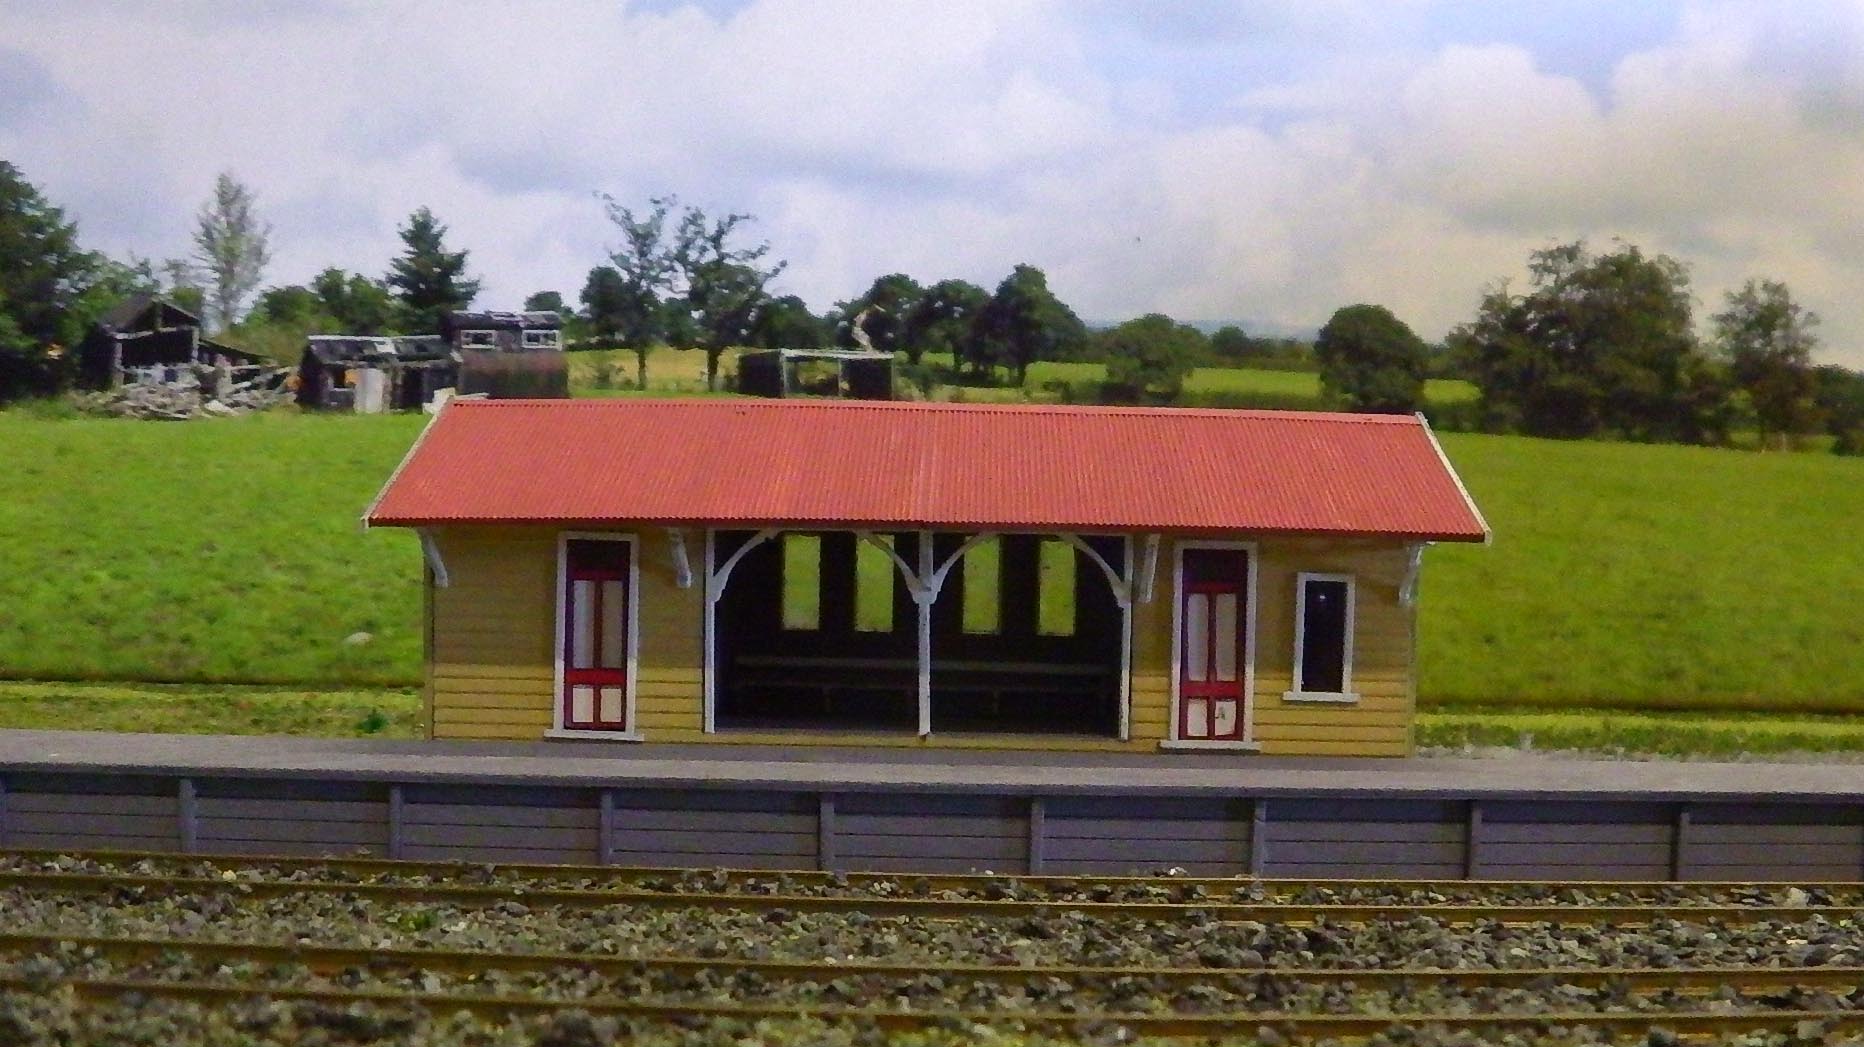 Model Train Buildings